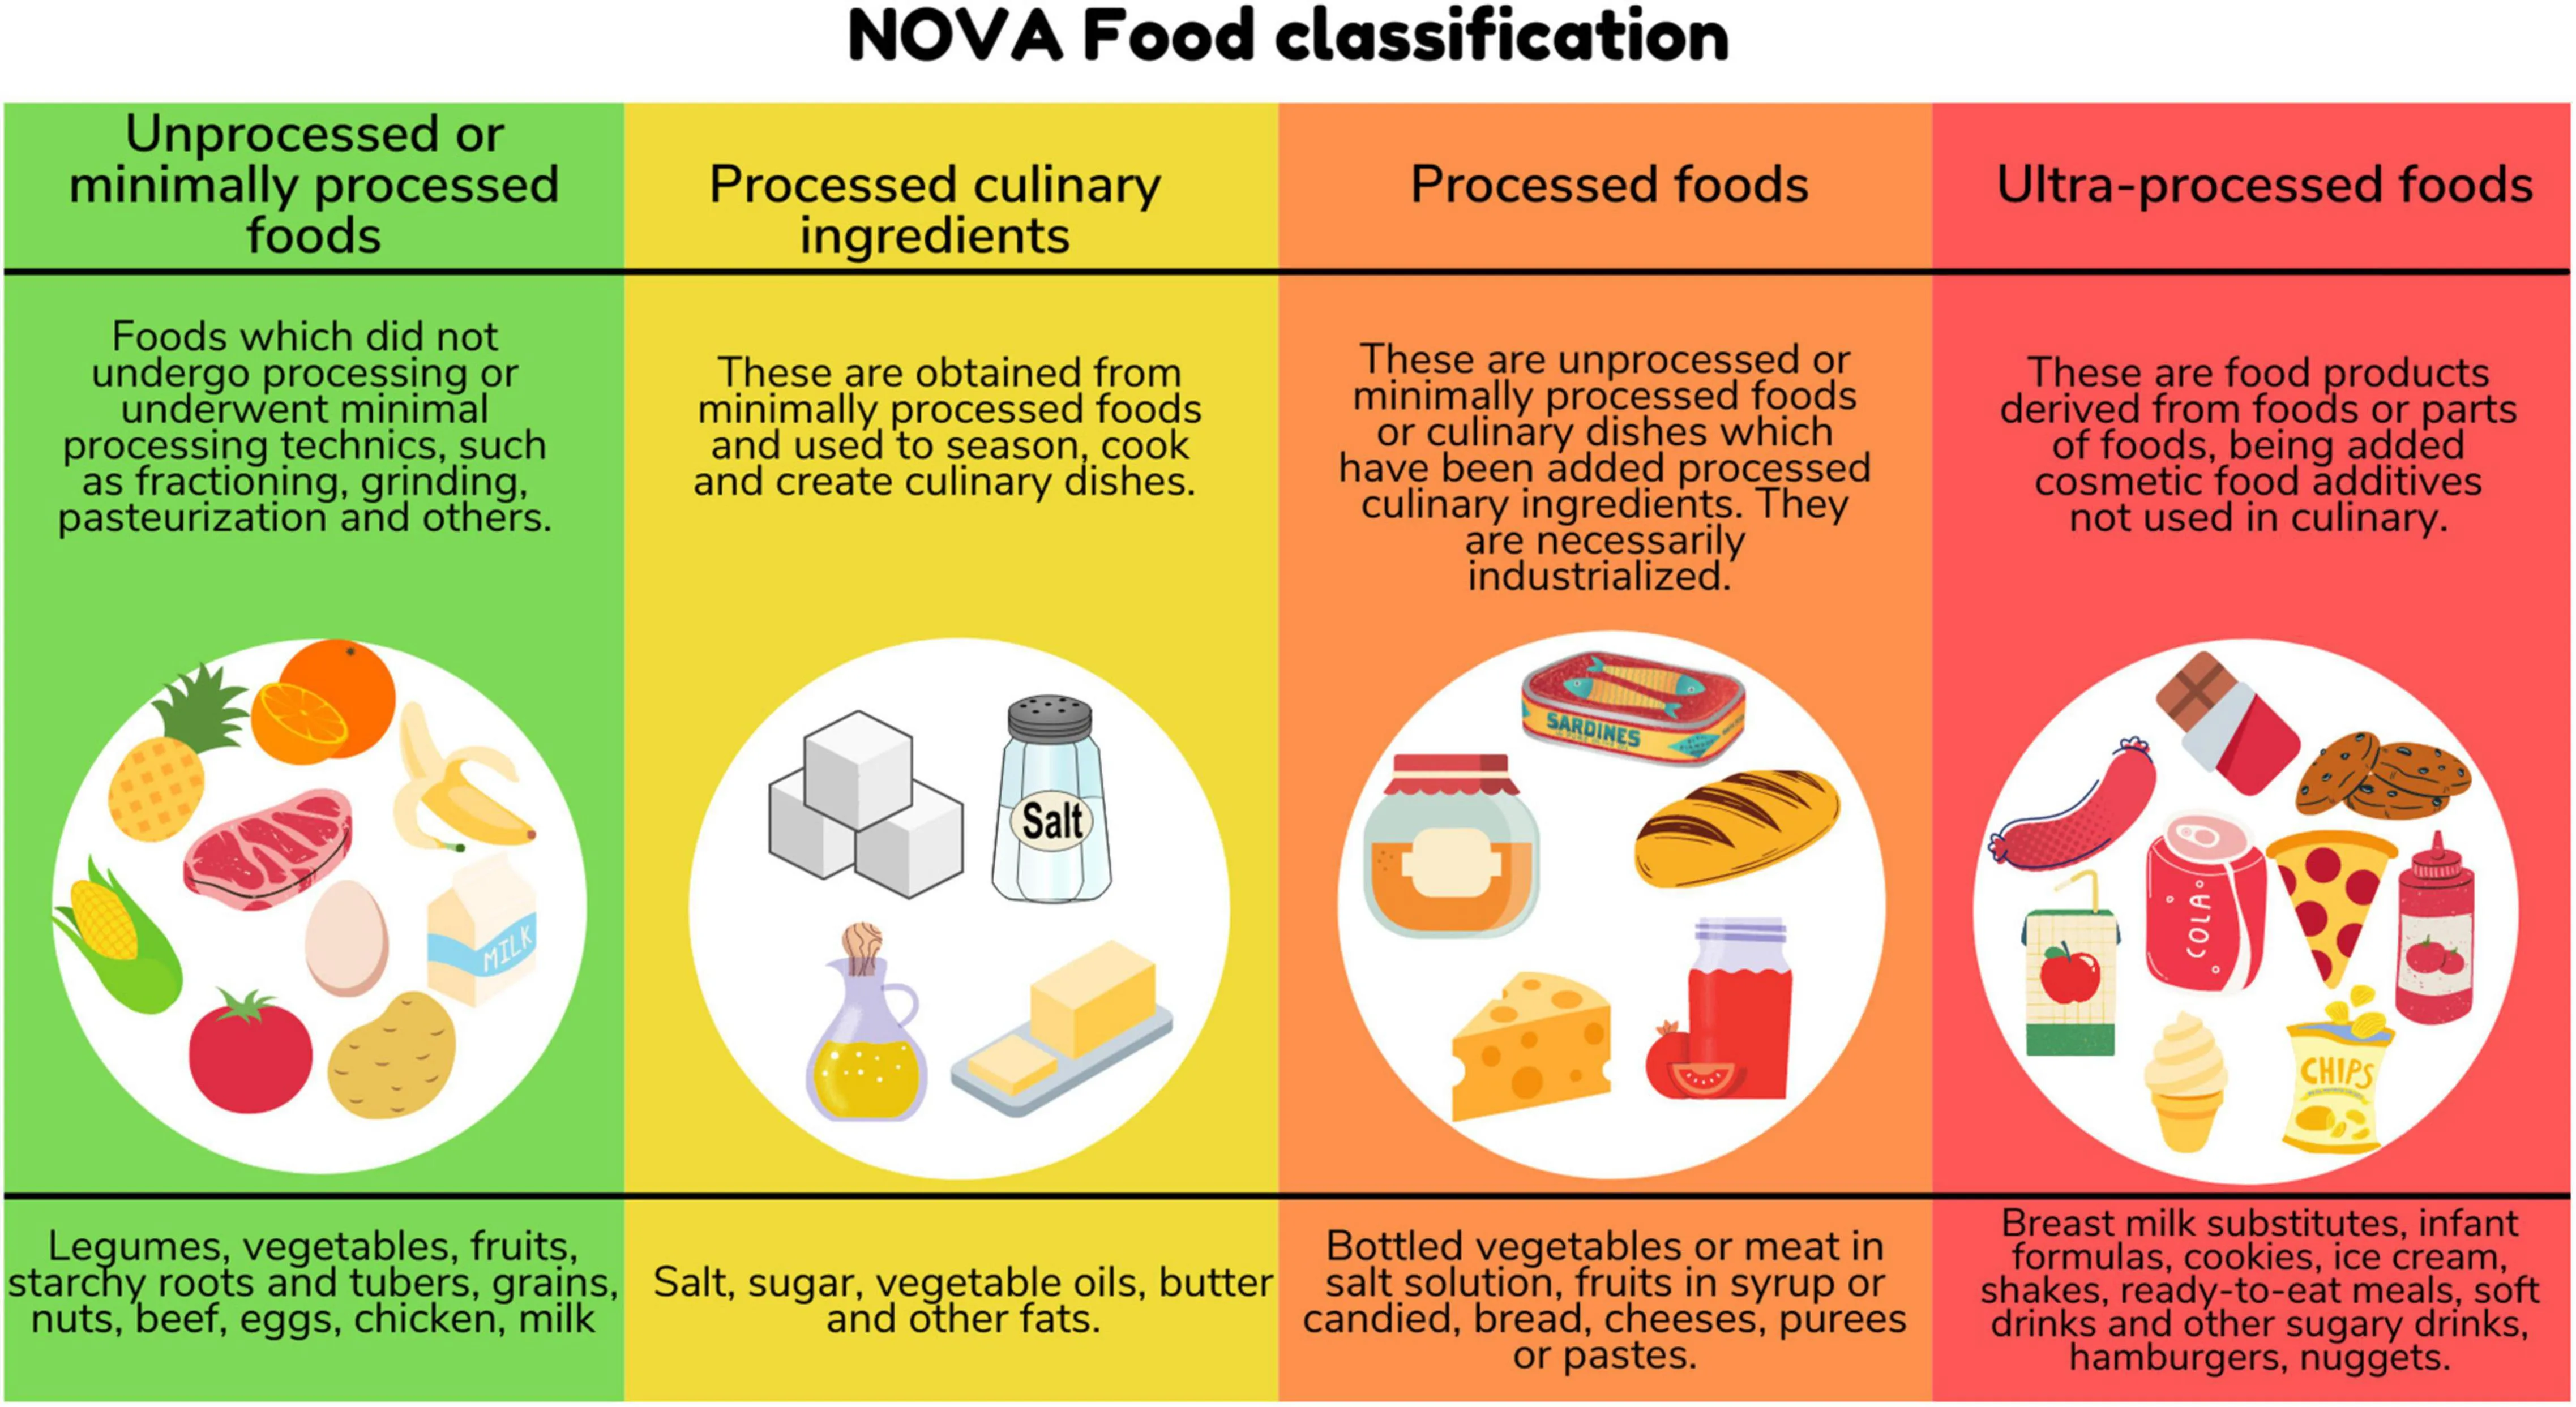 NOVA 식품분류체계